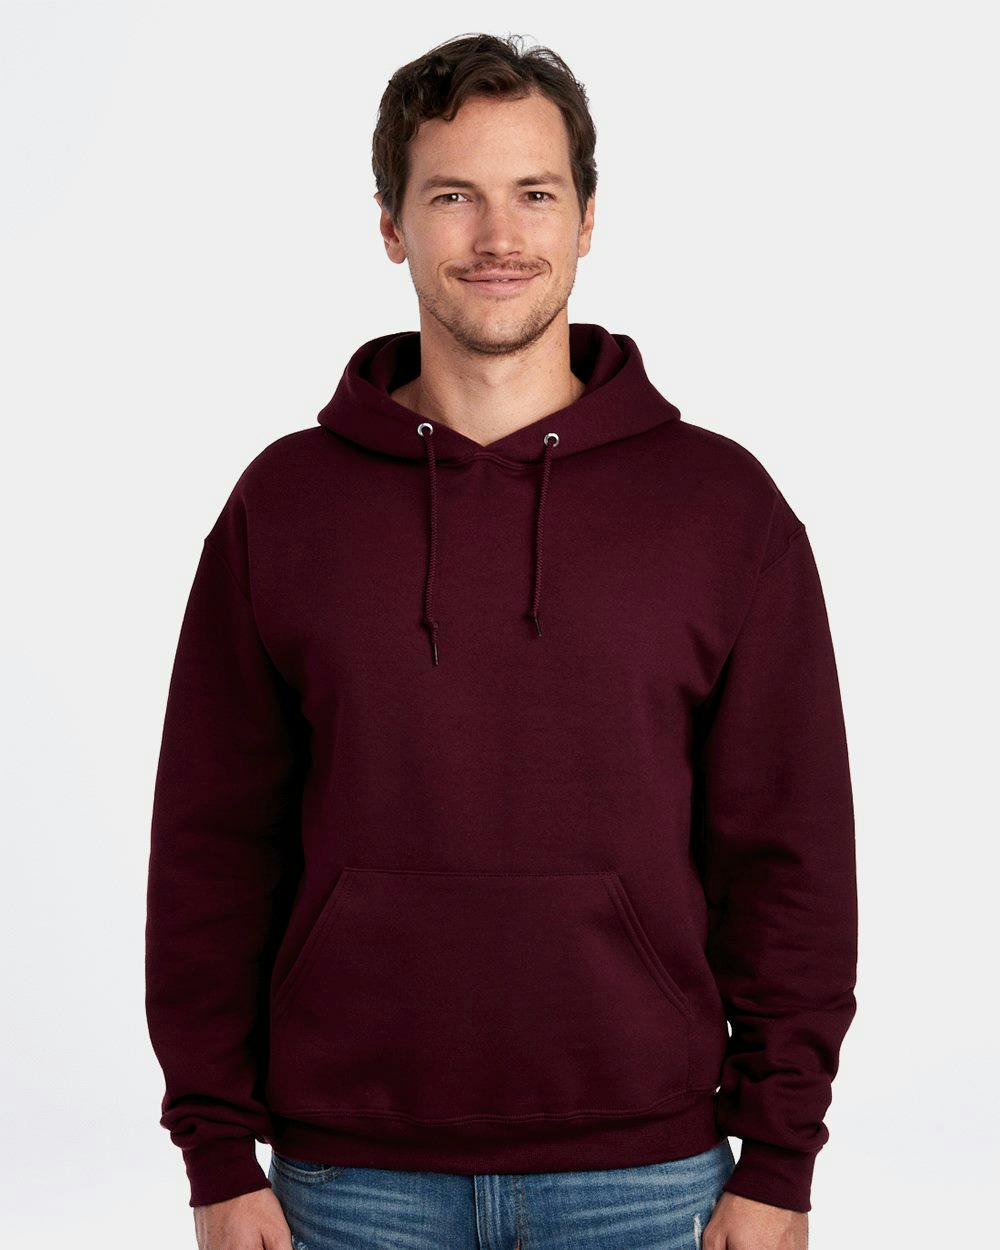 Image for Super Sweats NuBlend® Hooded Sweatshirt - 4997MR